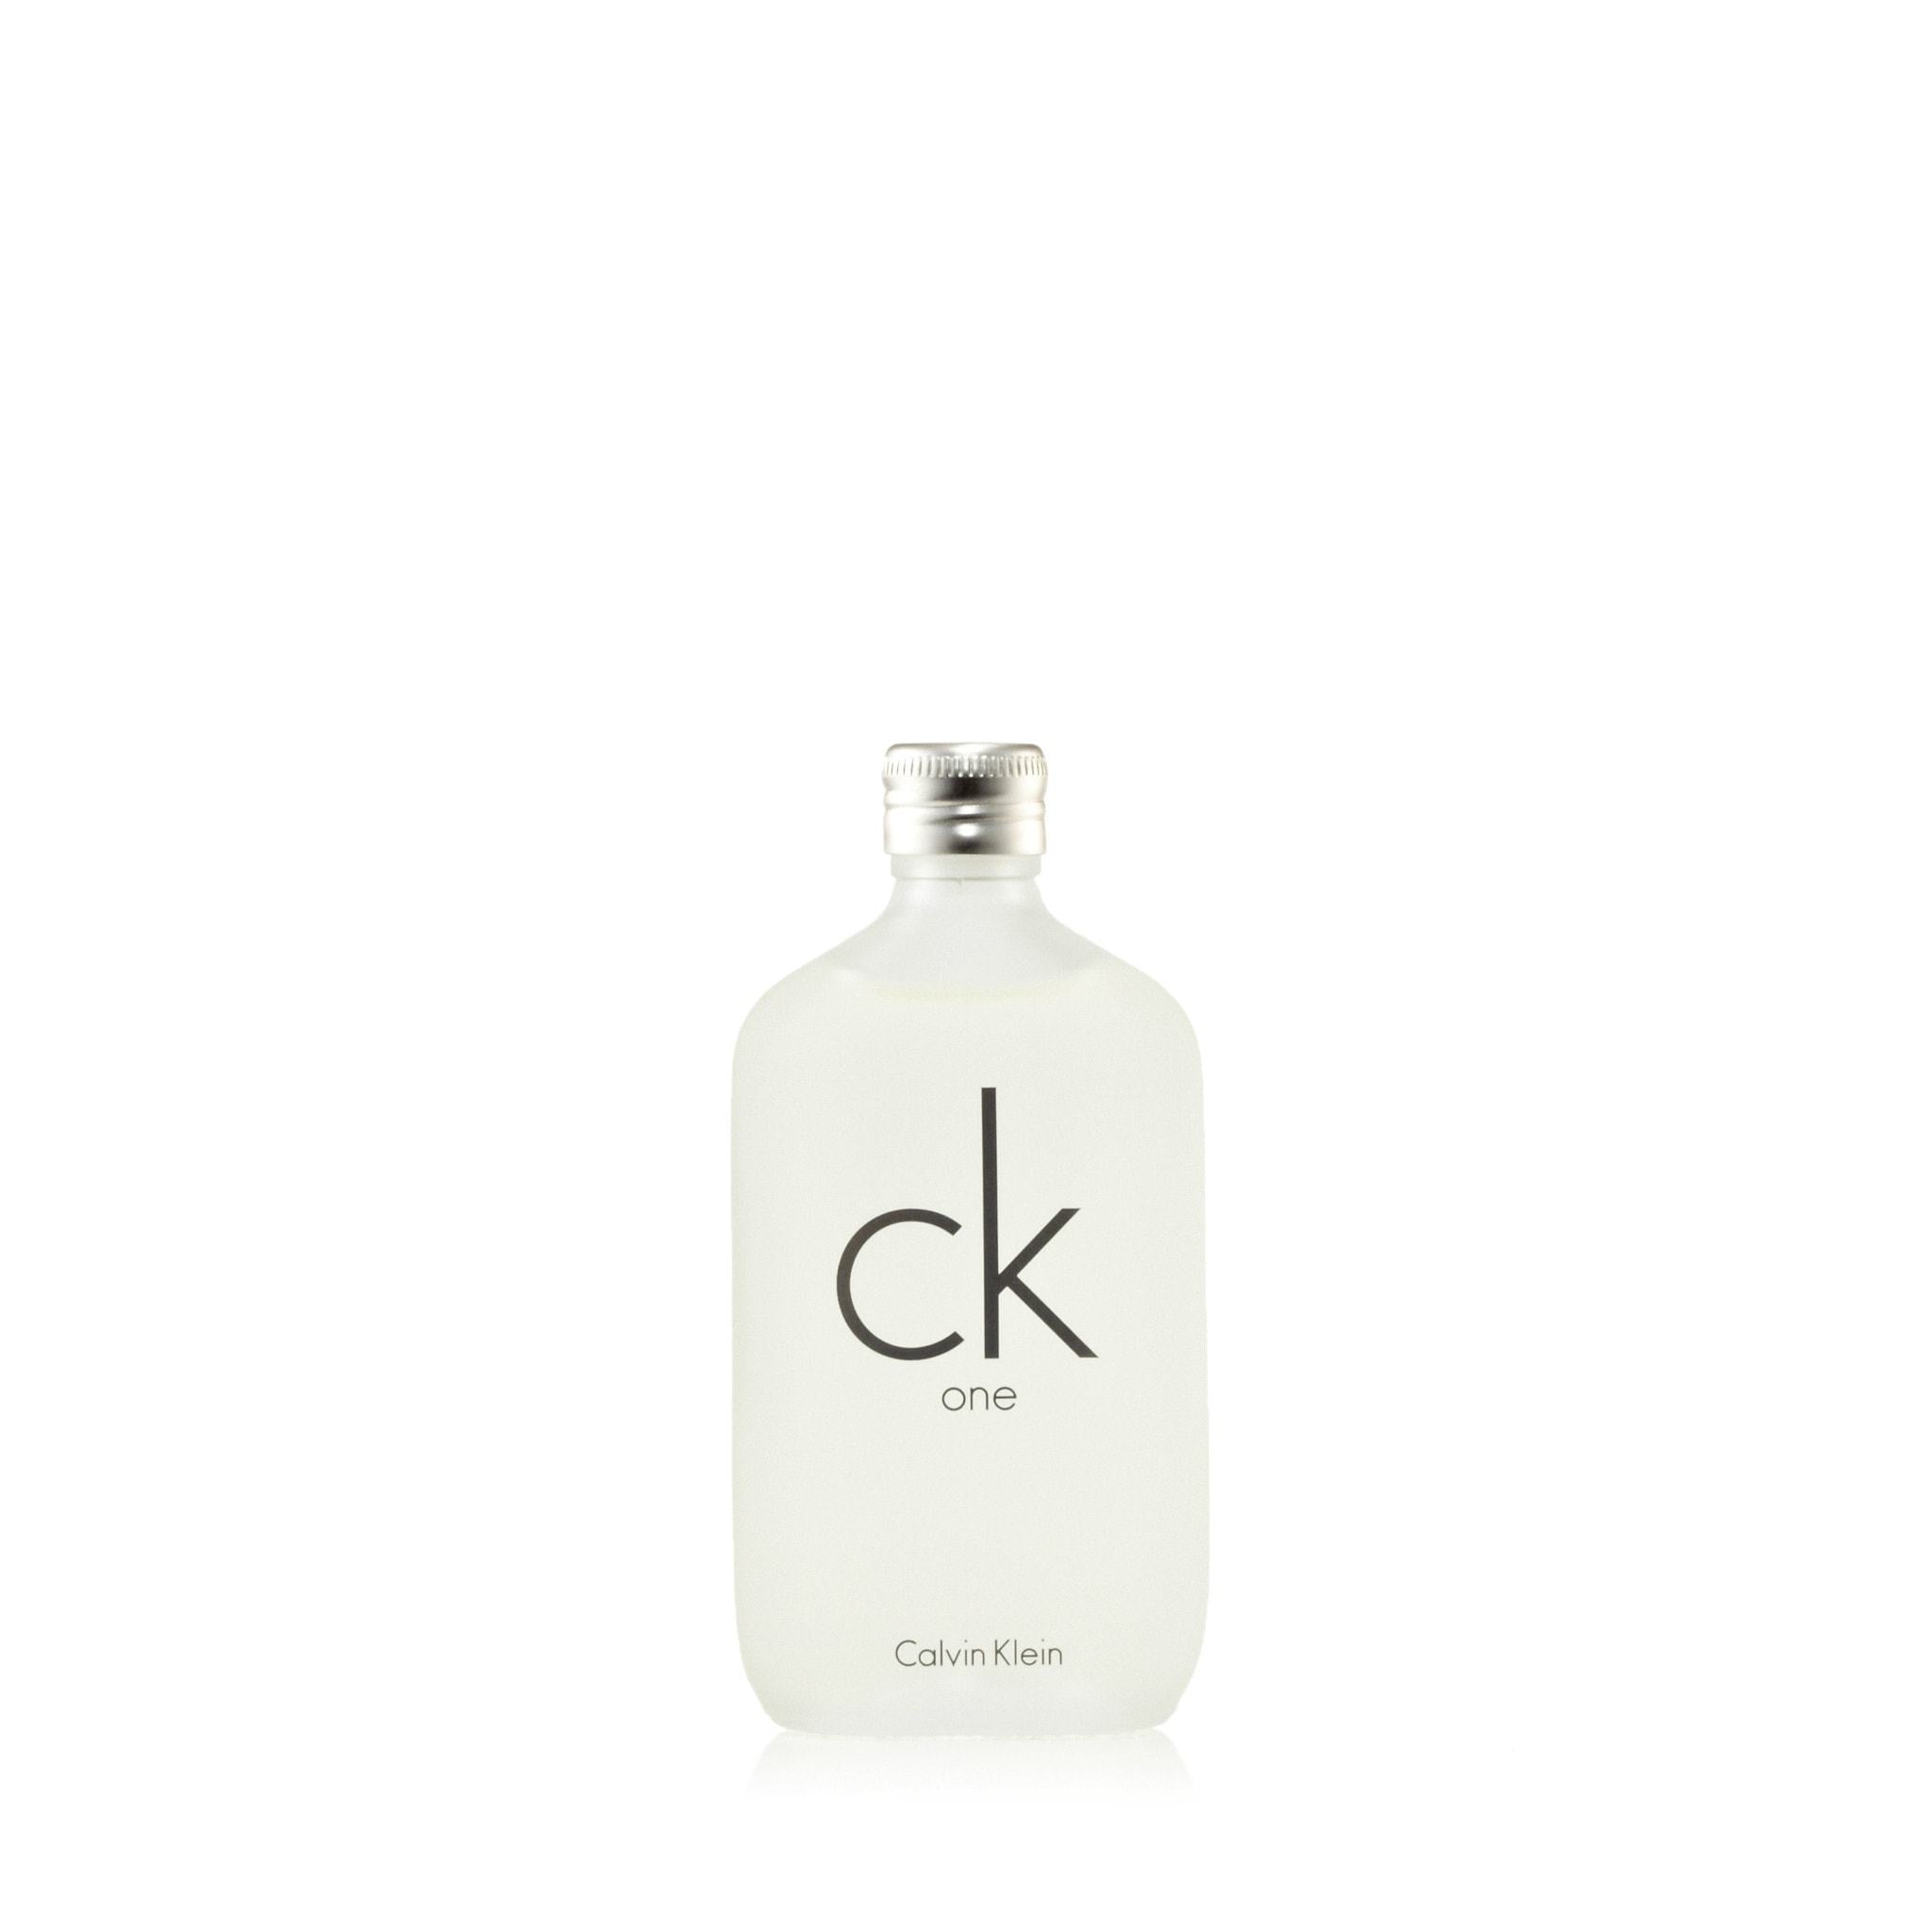 CK One Calvin Klein perfume - a fragrance for women and men 1994